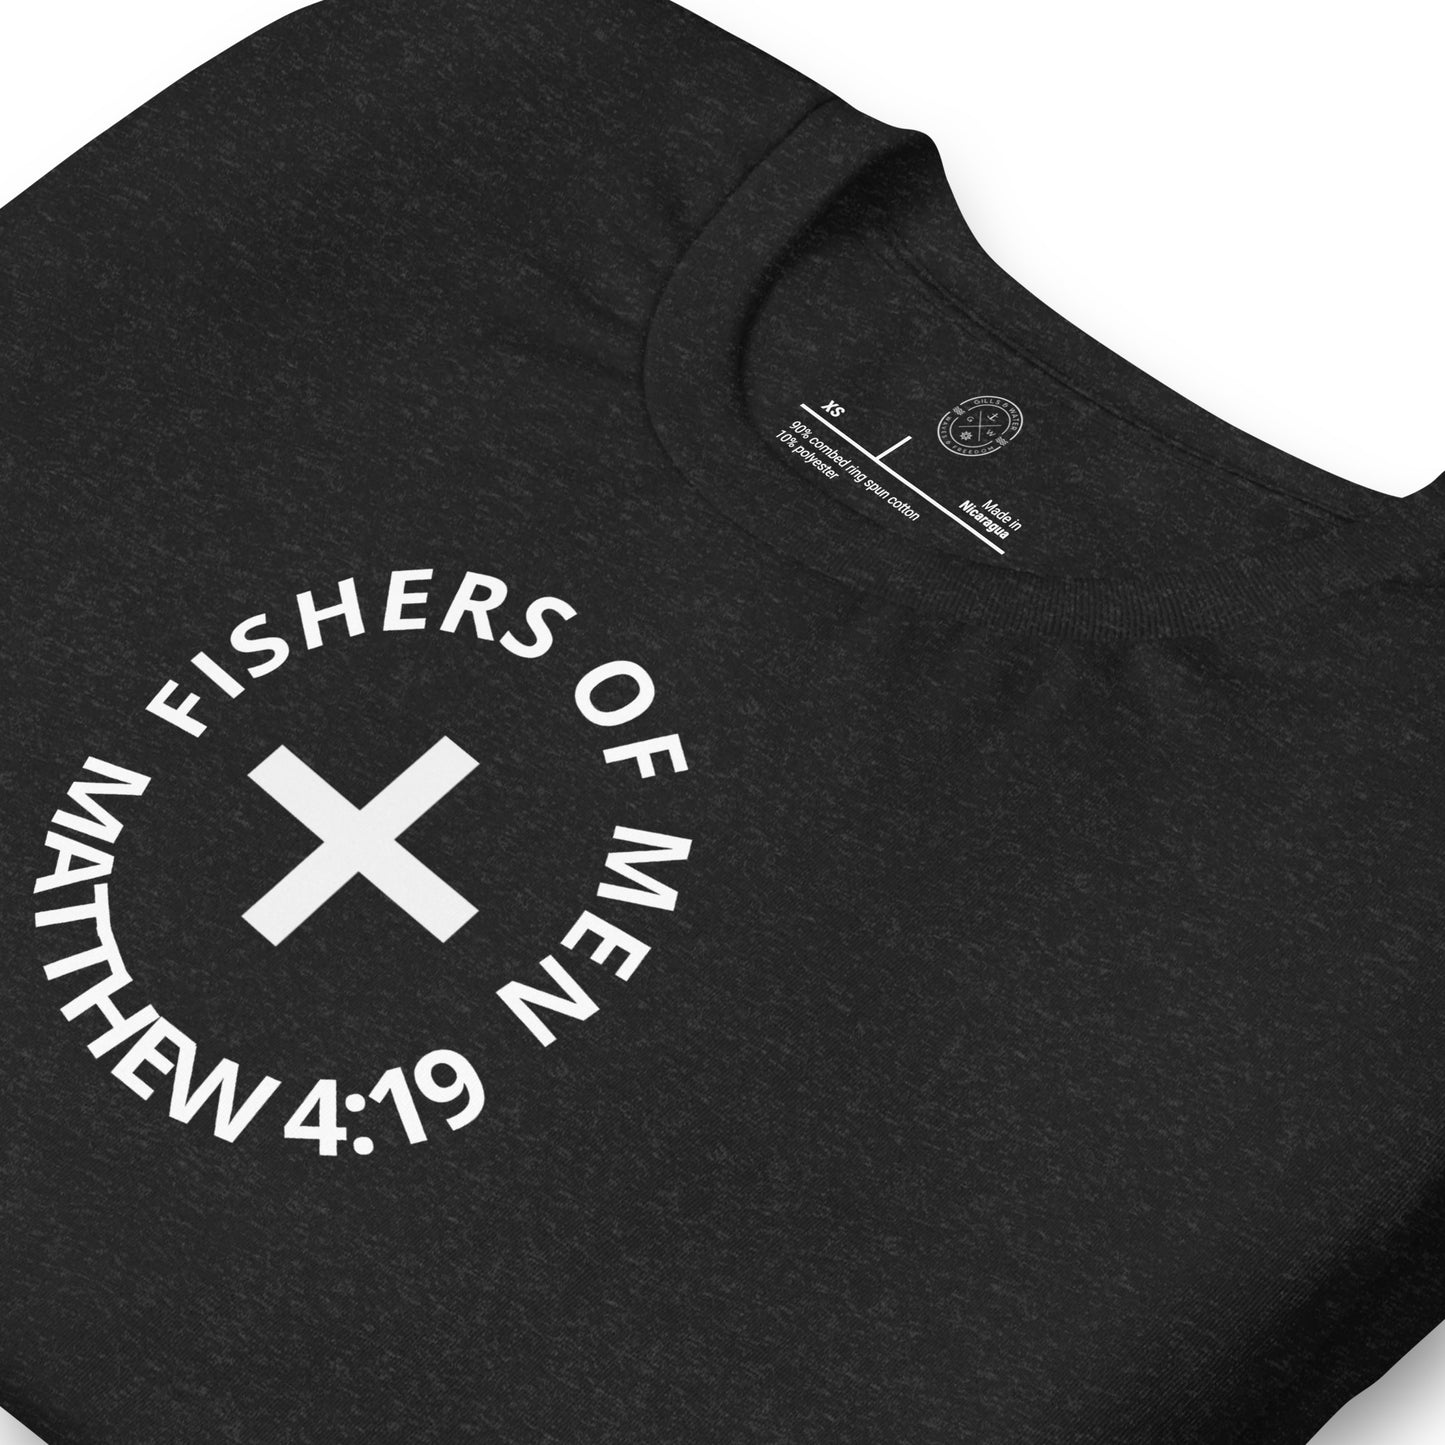 FISHERS OF MEN: Premium Unisex t-shirt by Gills & Water